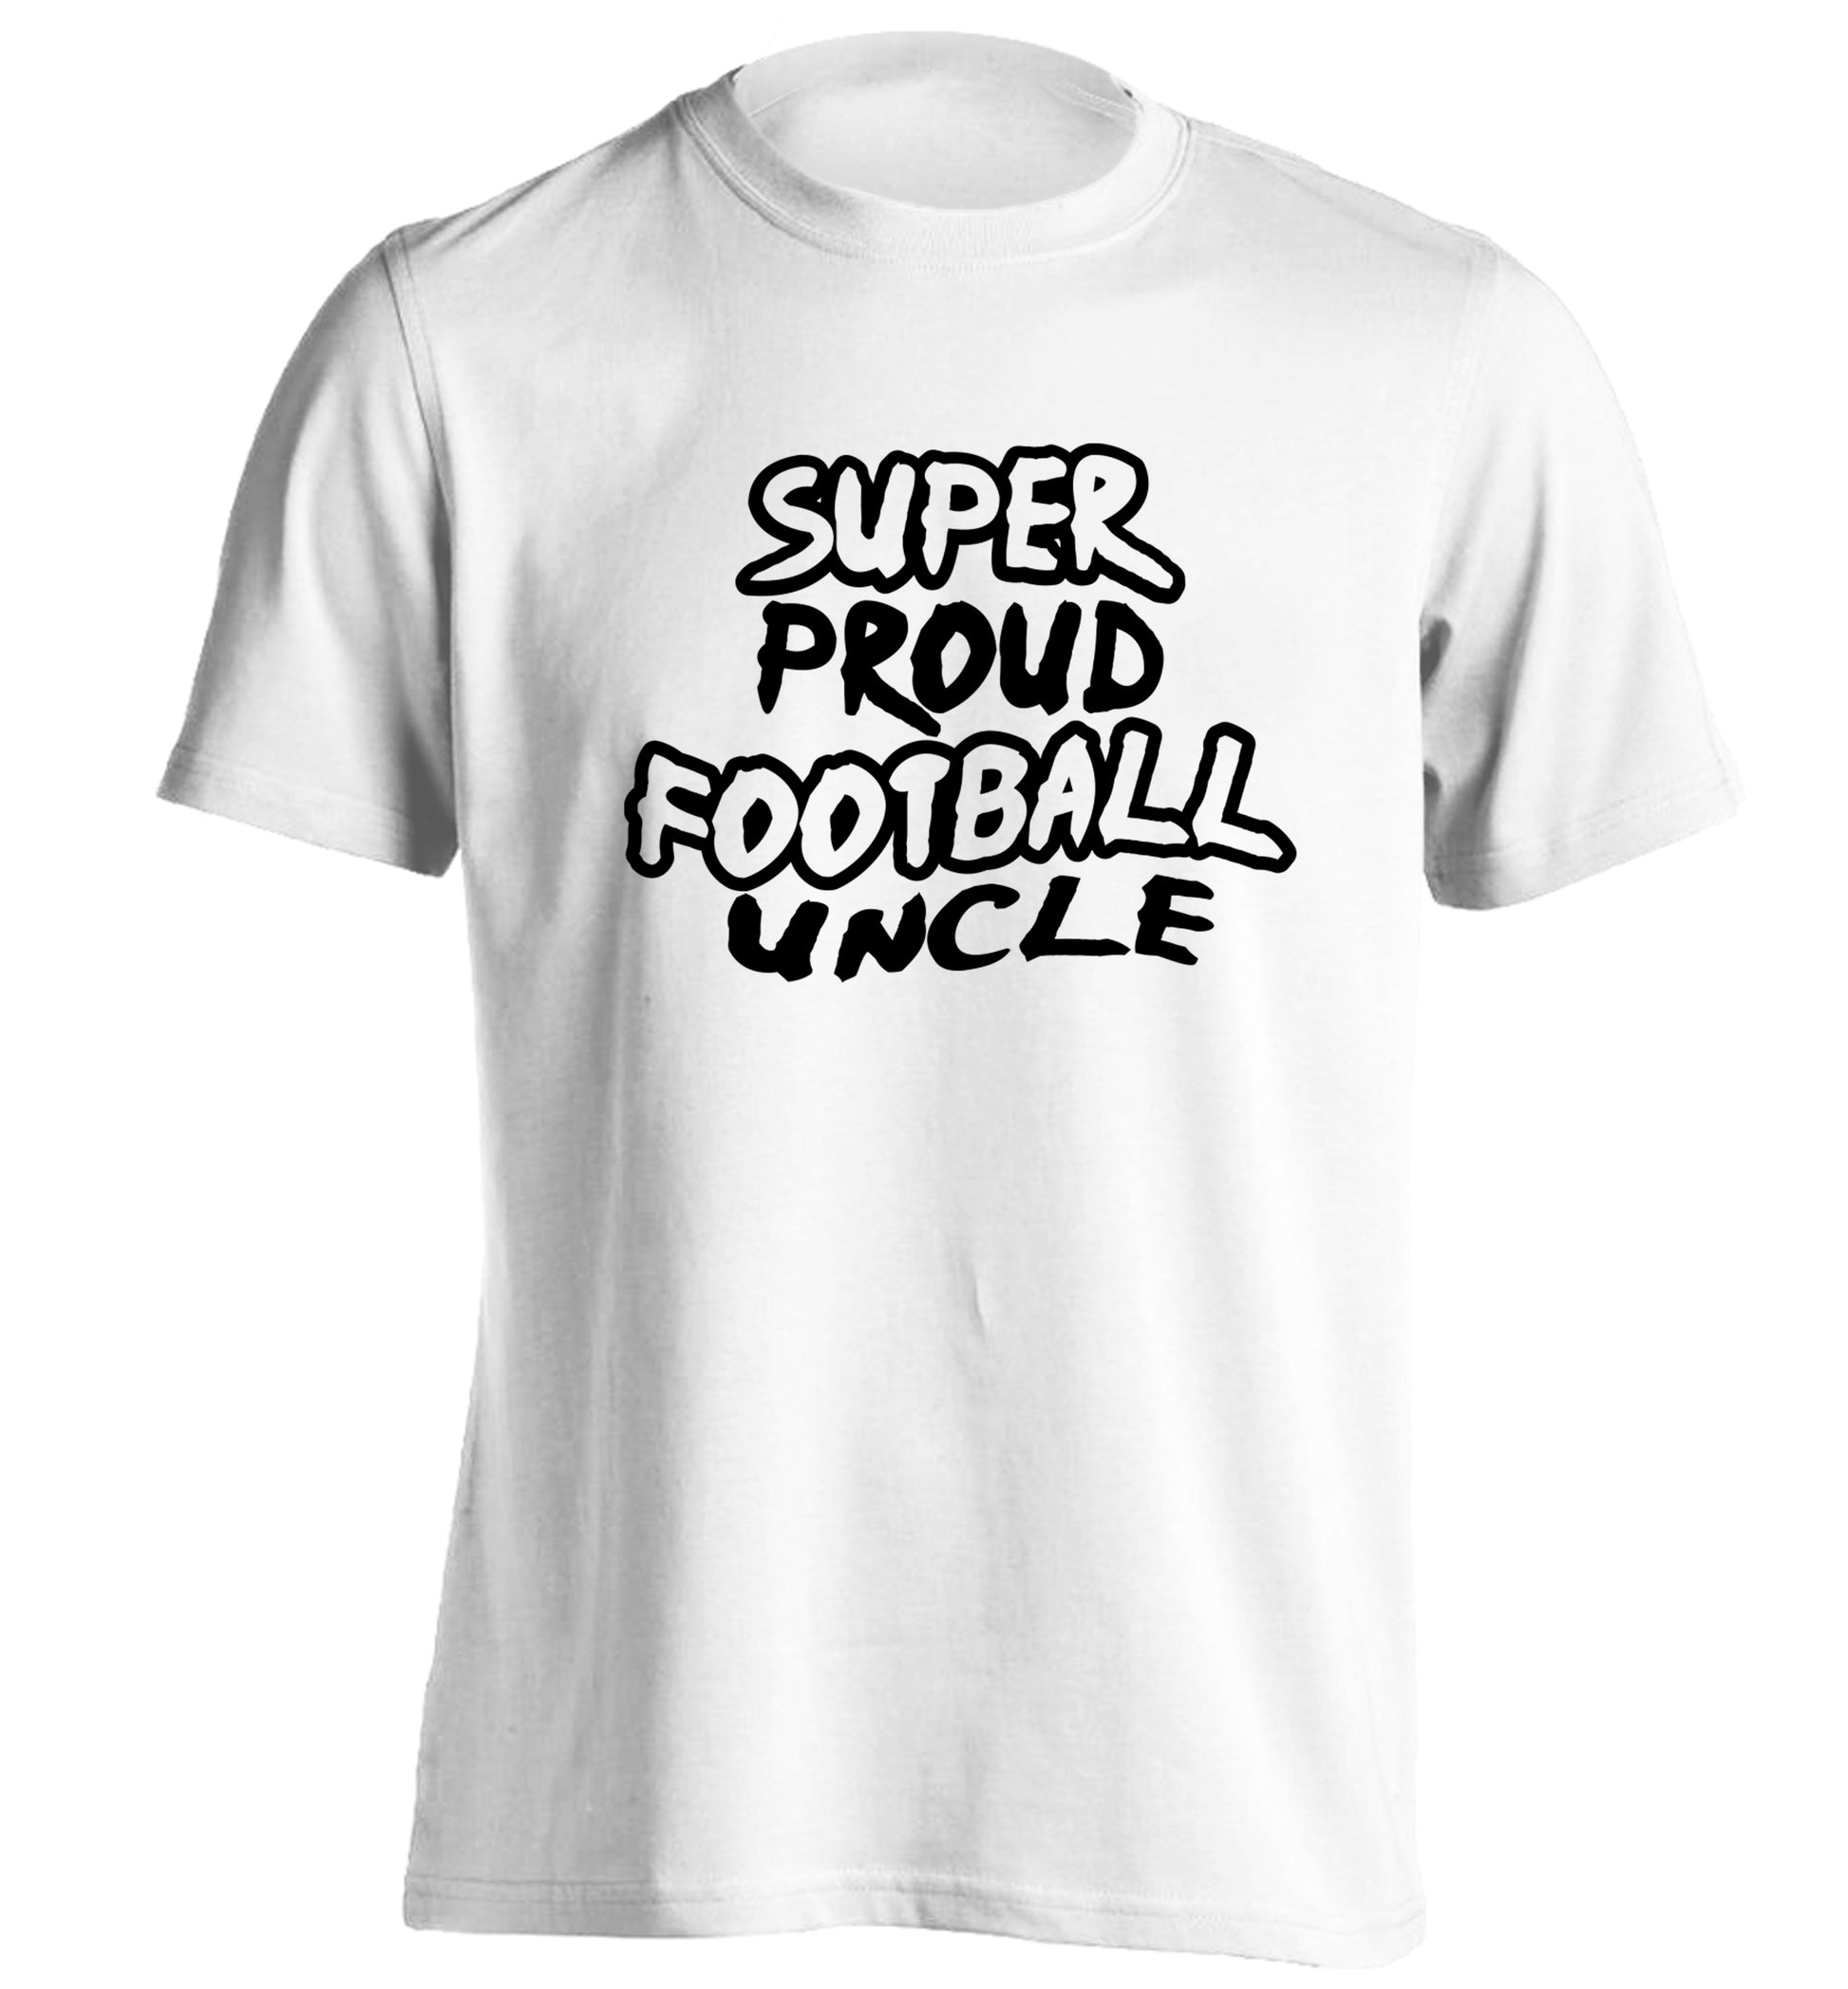 Super proud football uncle adults unisexwhite Tshirt 2XL